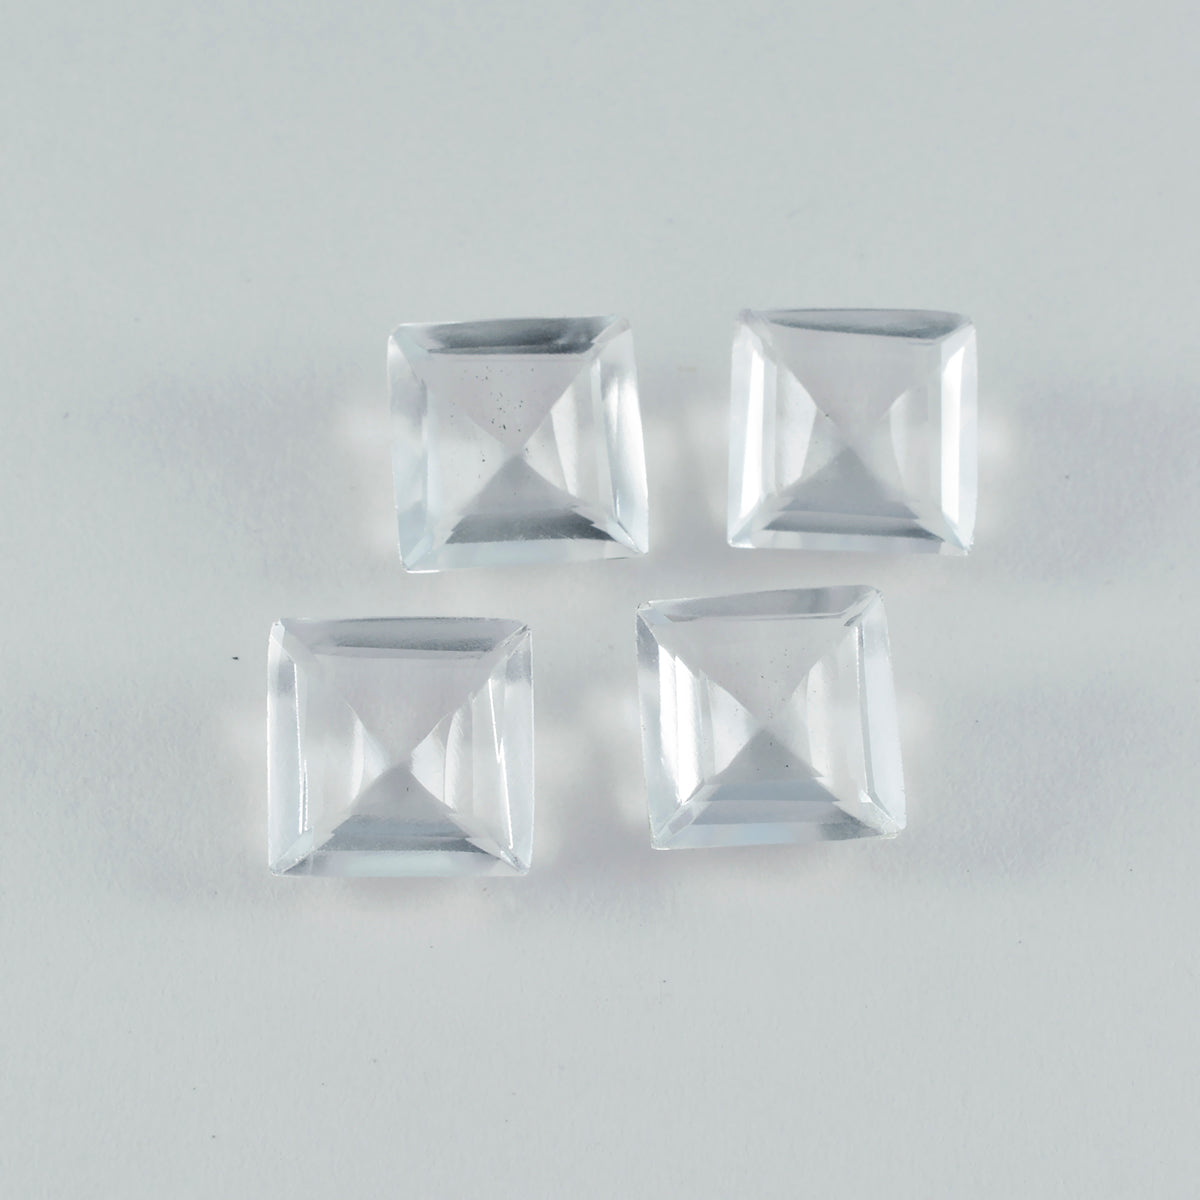 Riyogems 1PC White Crystal Quartz Faceted 13x13 mm Square Shape handsome Quality Loose Gems